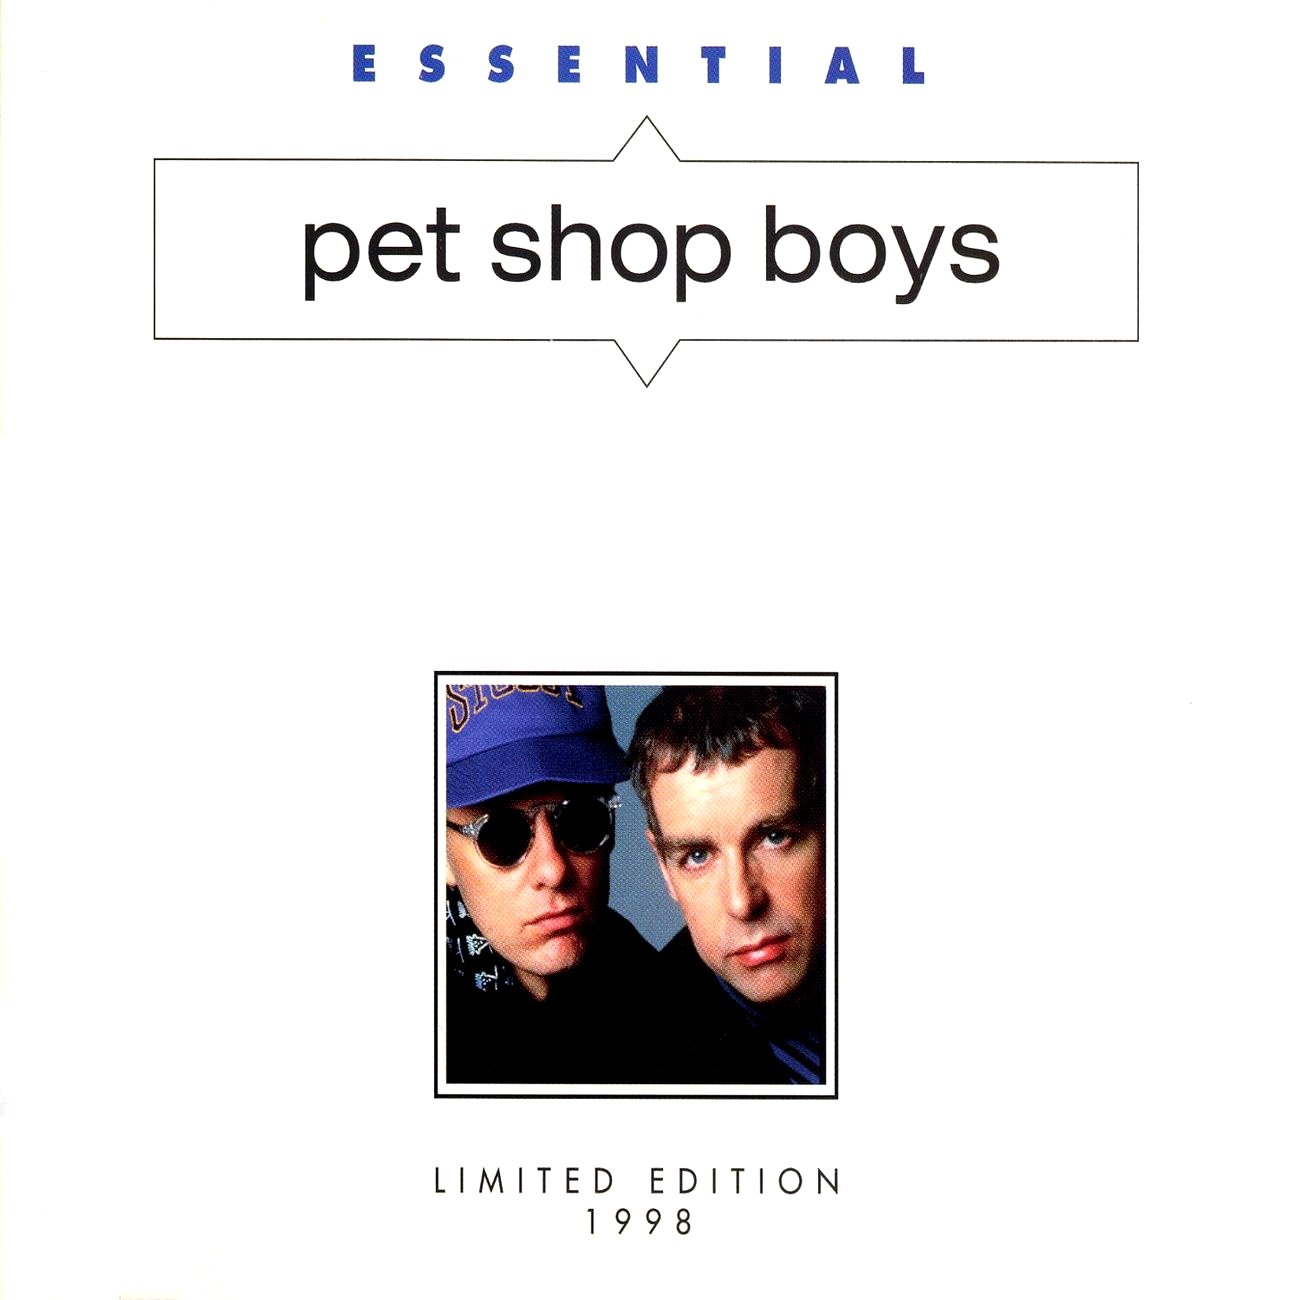 Pet shop boys were. Pet shop boys 1998. Pet shop boys Essential. Pet shop boys обложки альбомов. Pet shop boys обложка.